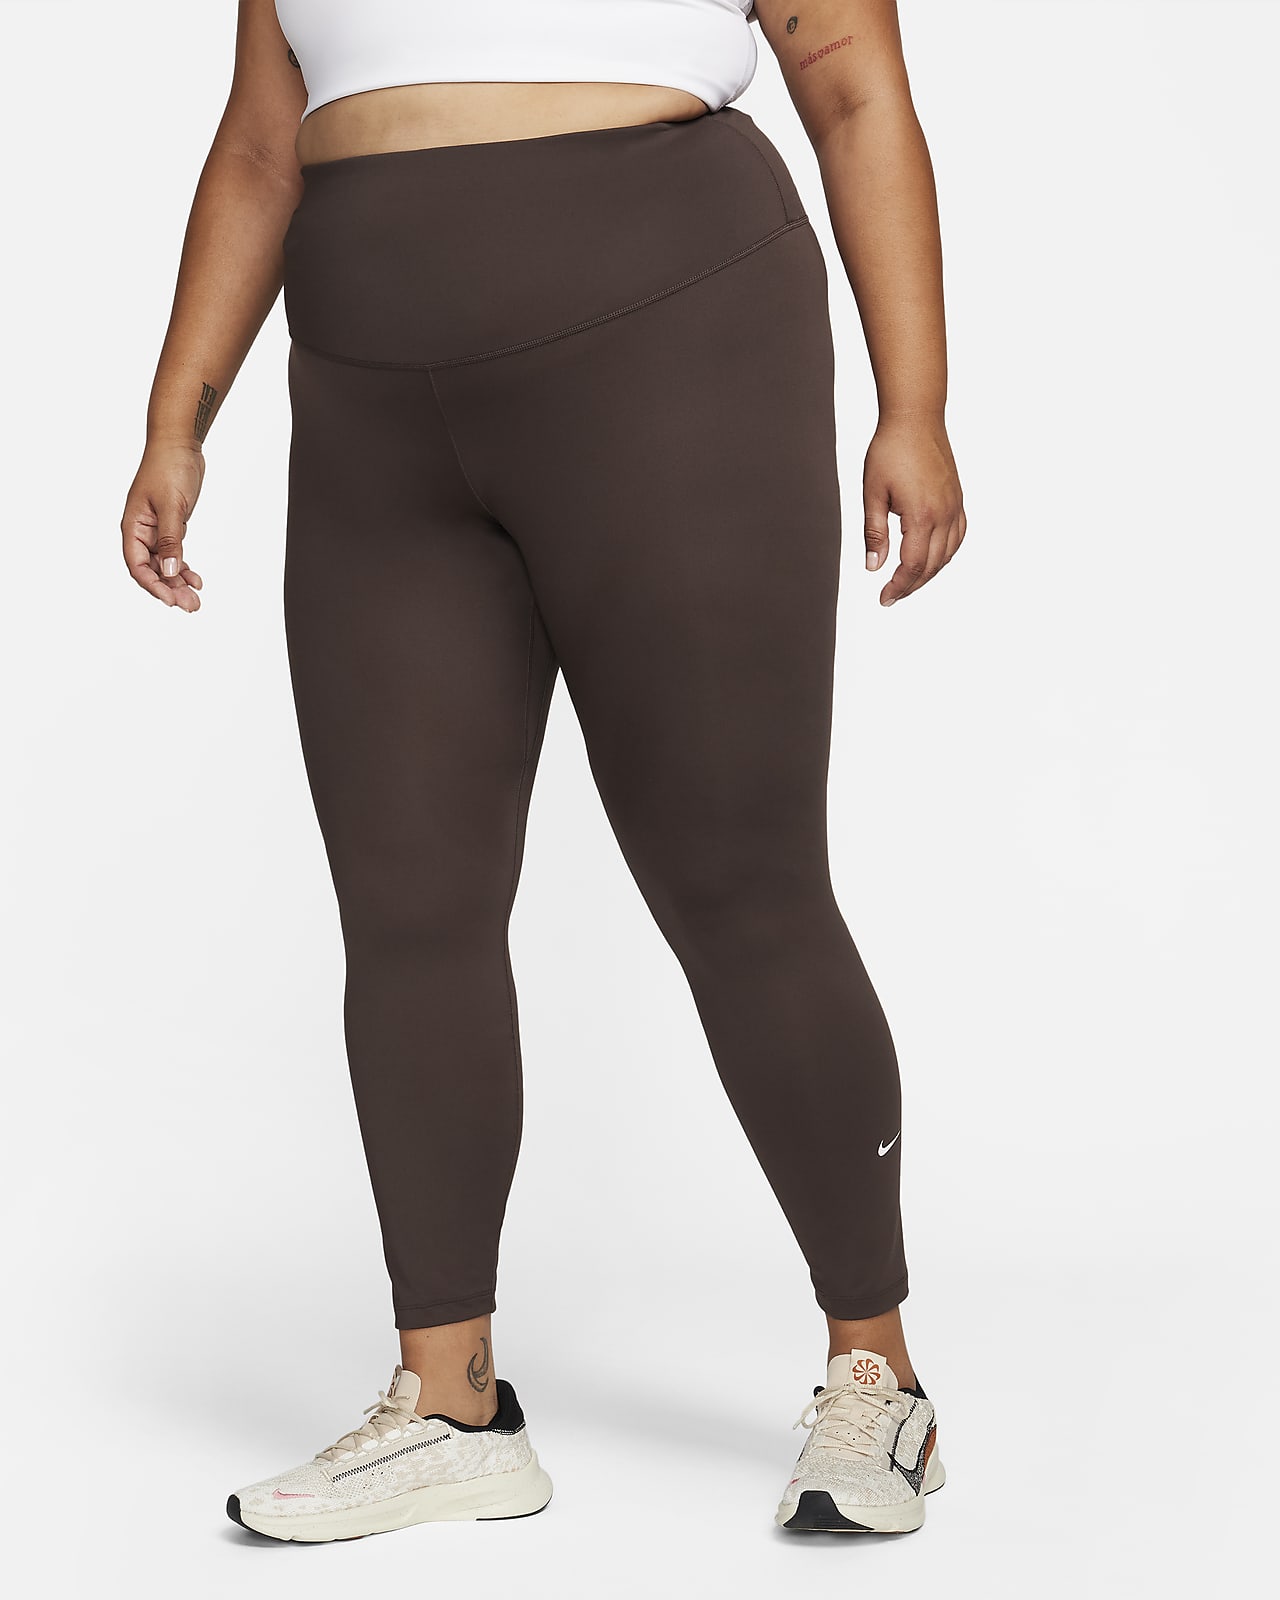 Leggings de cintura subida Nike One para mulher (tamanhos grandes